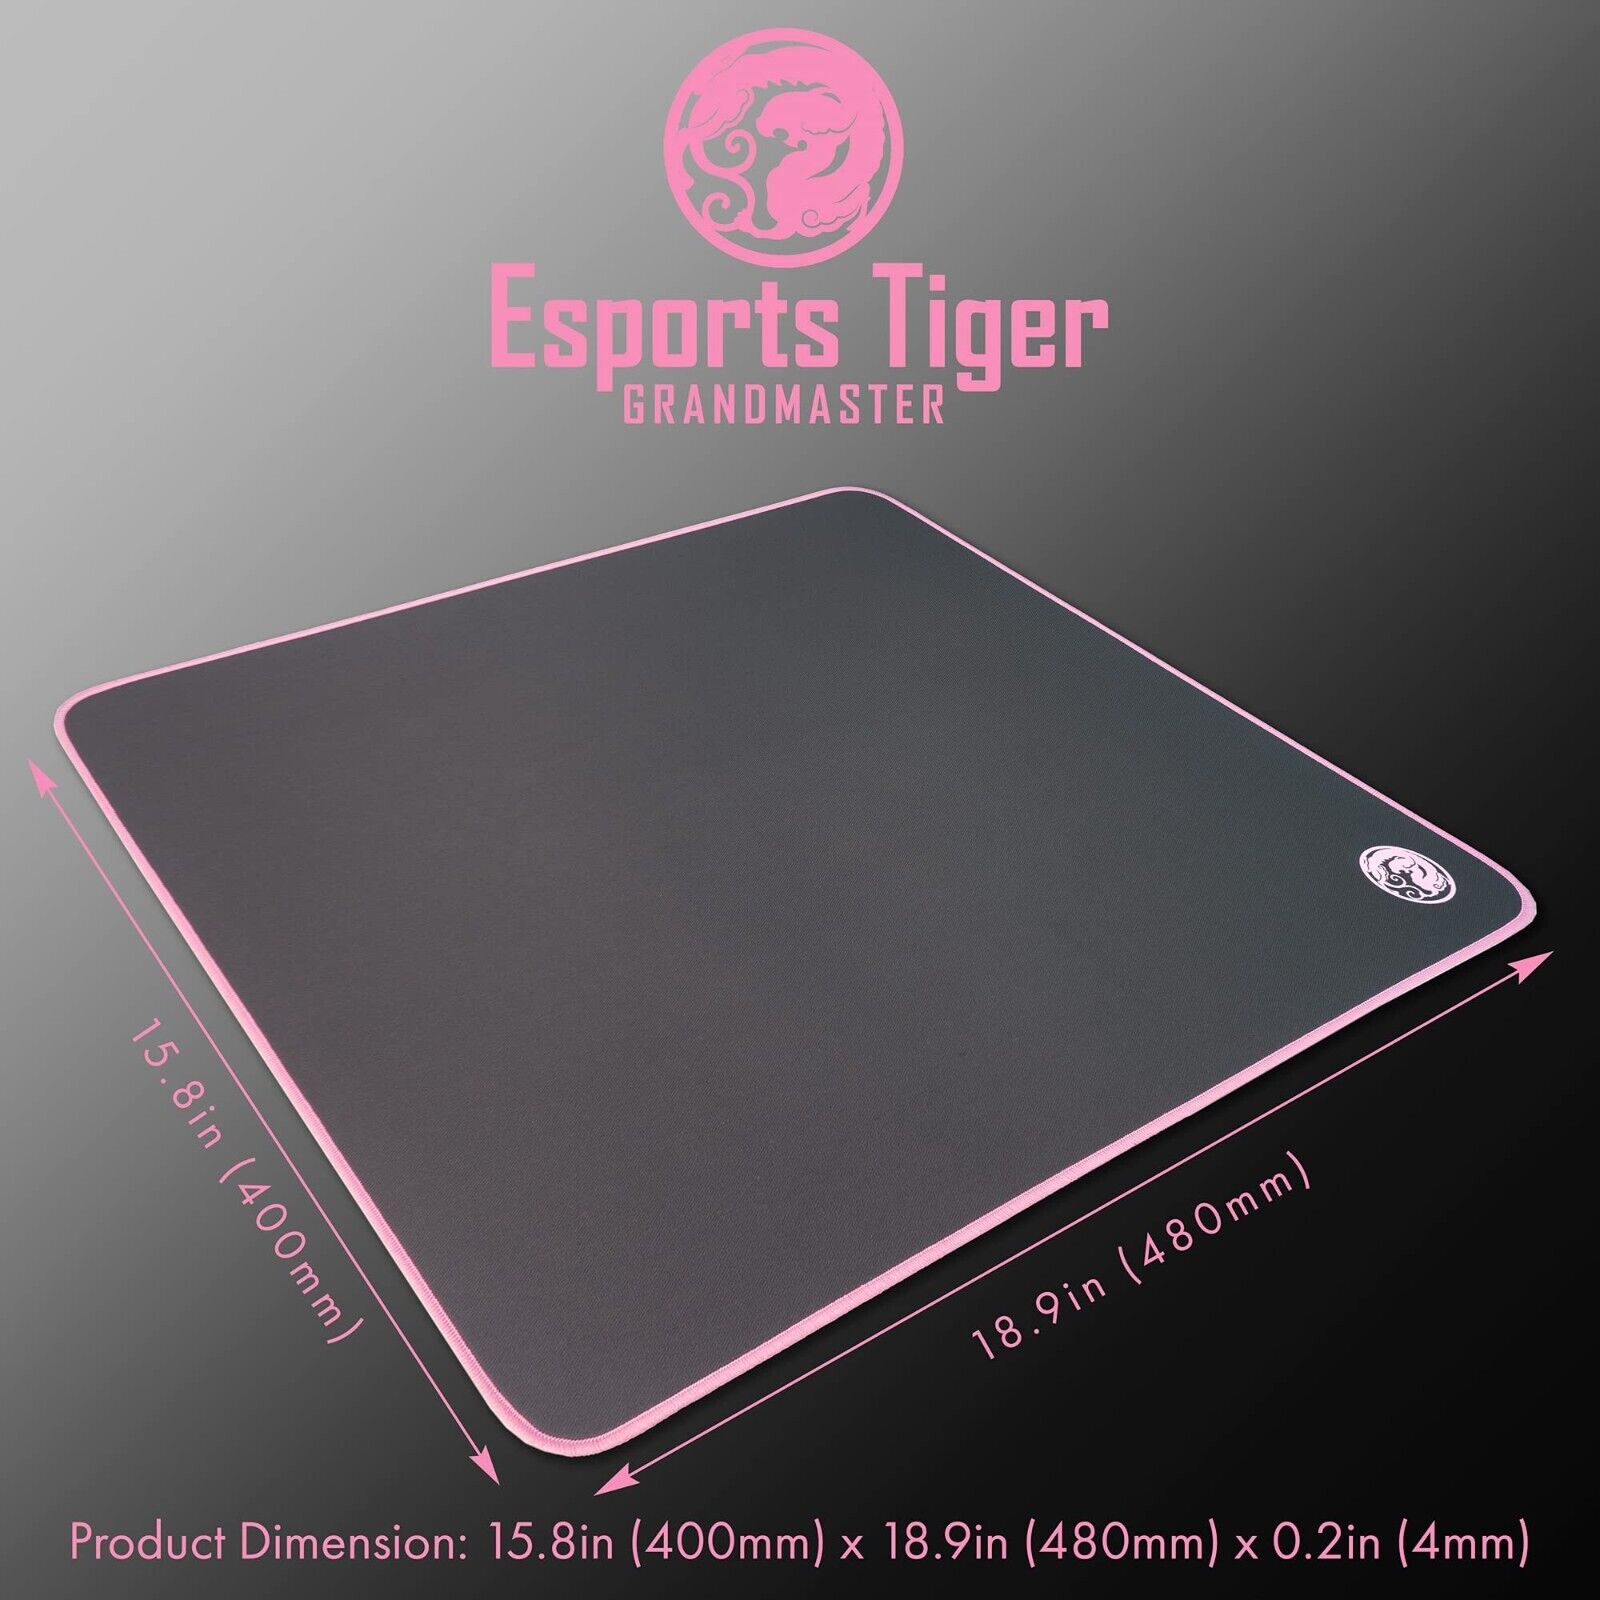 Esports Tiger Grandmaster Gaming Mouse Pad Large Black w/ Pink Border 480x400mm